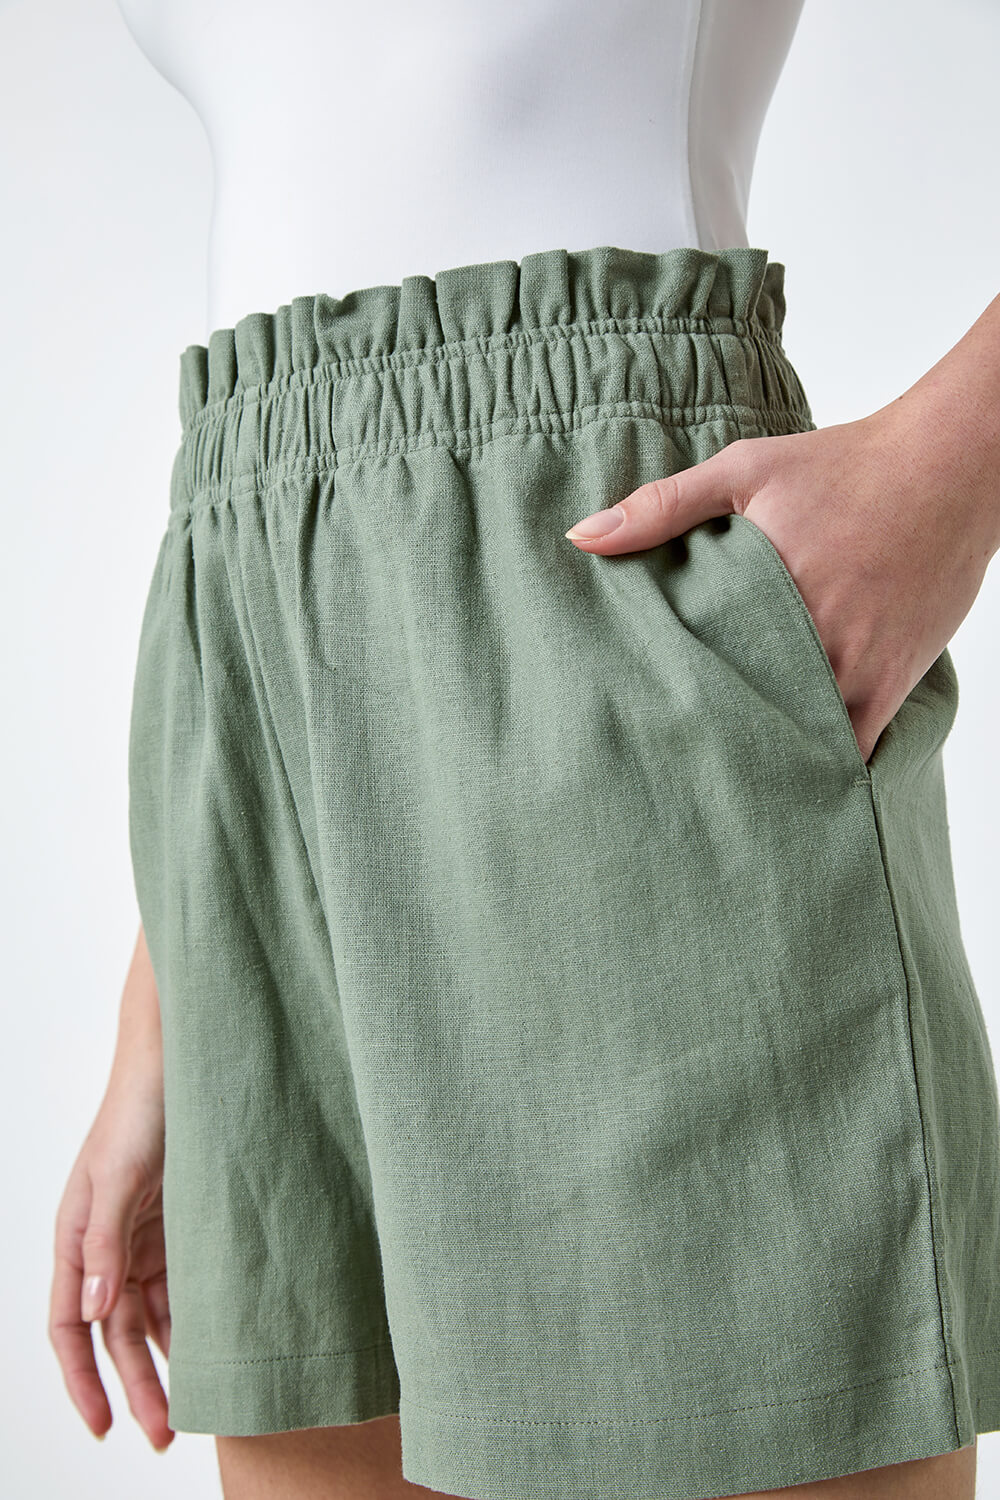 KHAKI Linen Blend Pocket Shorts, Image 5 of 7